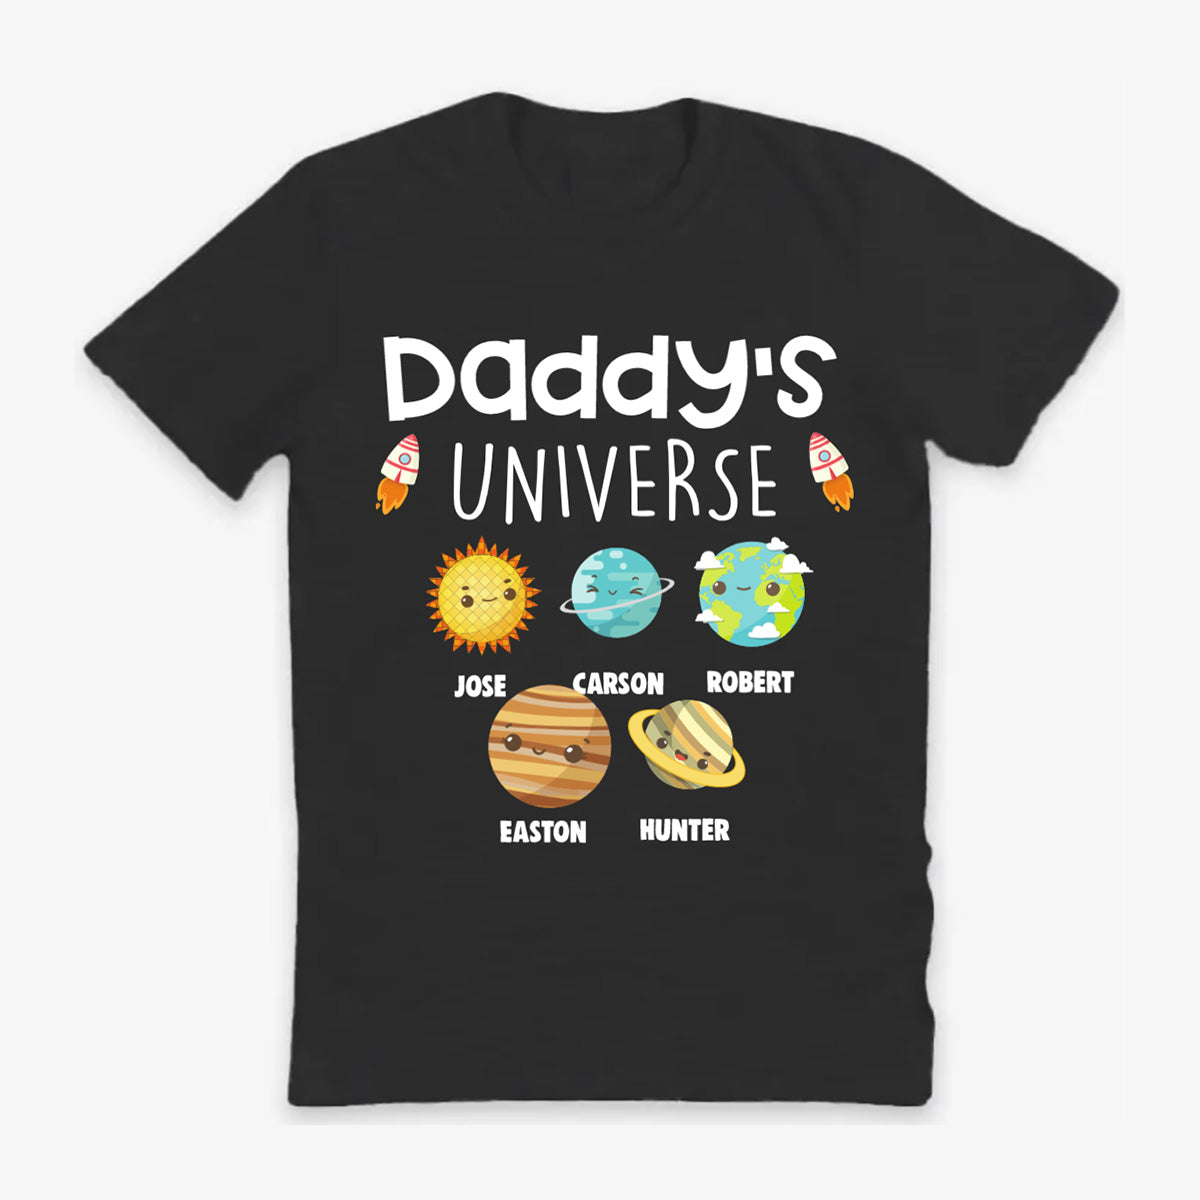 Daddy's Universe パーソナライズシャツ